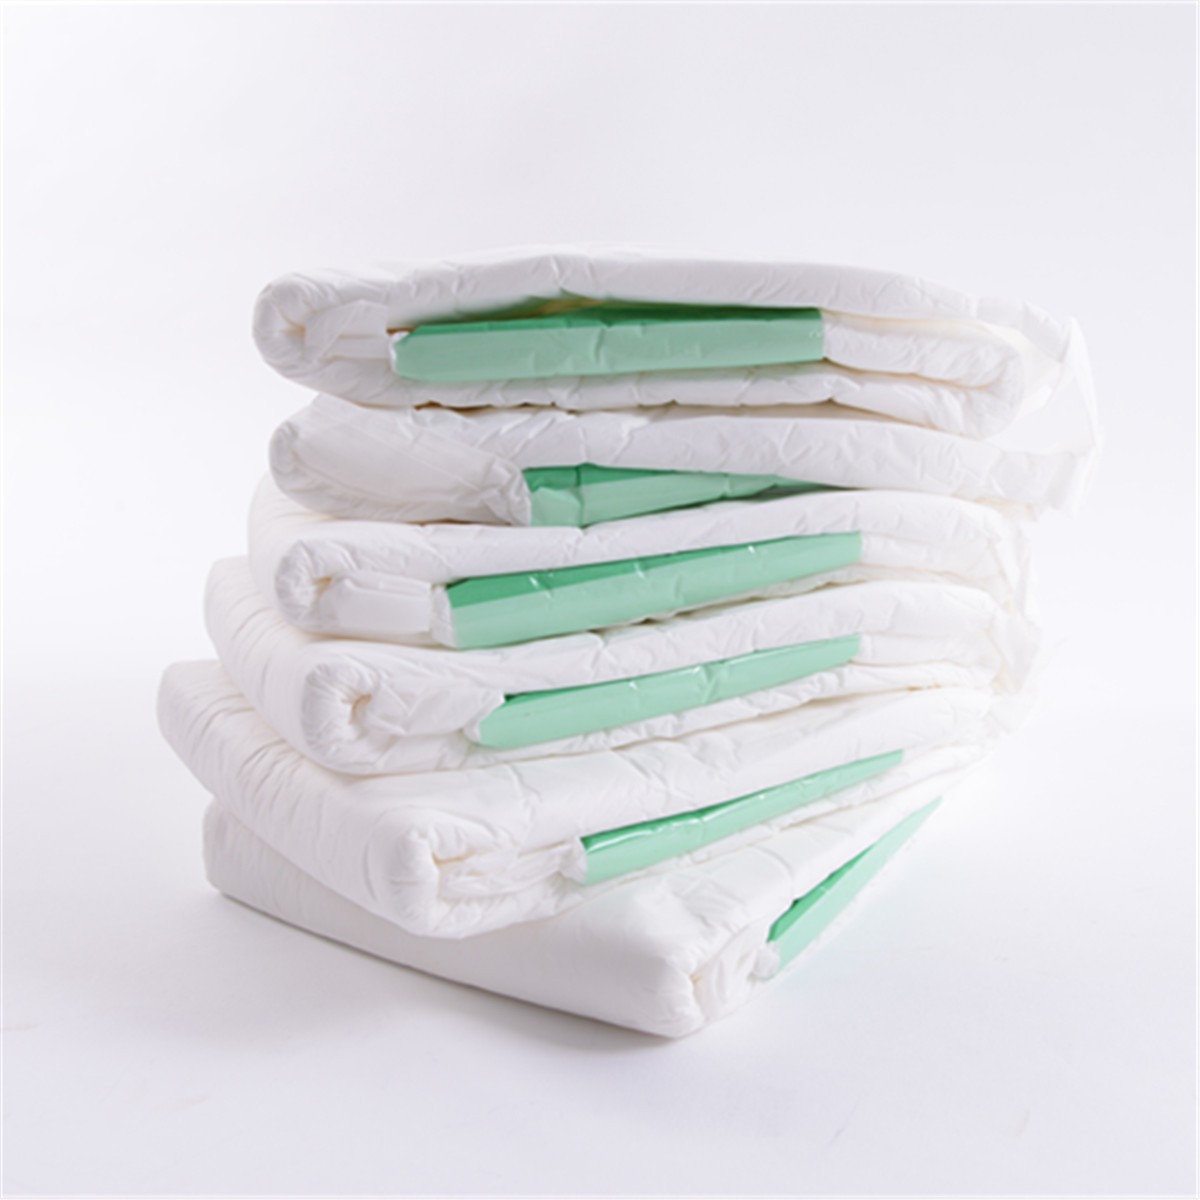 Common misunderstandings of adult diapers